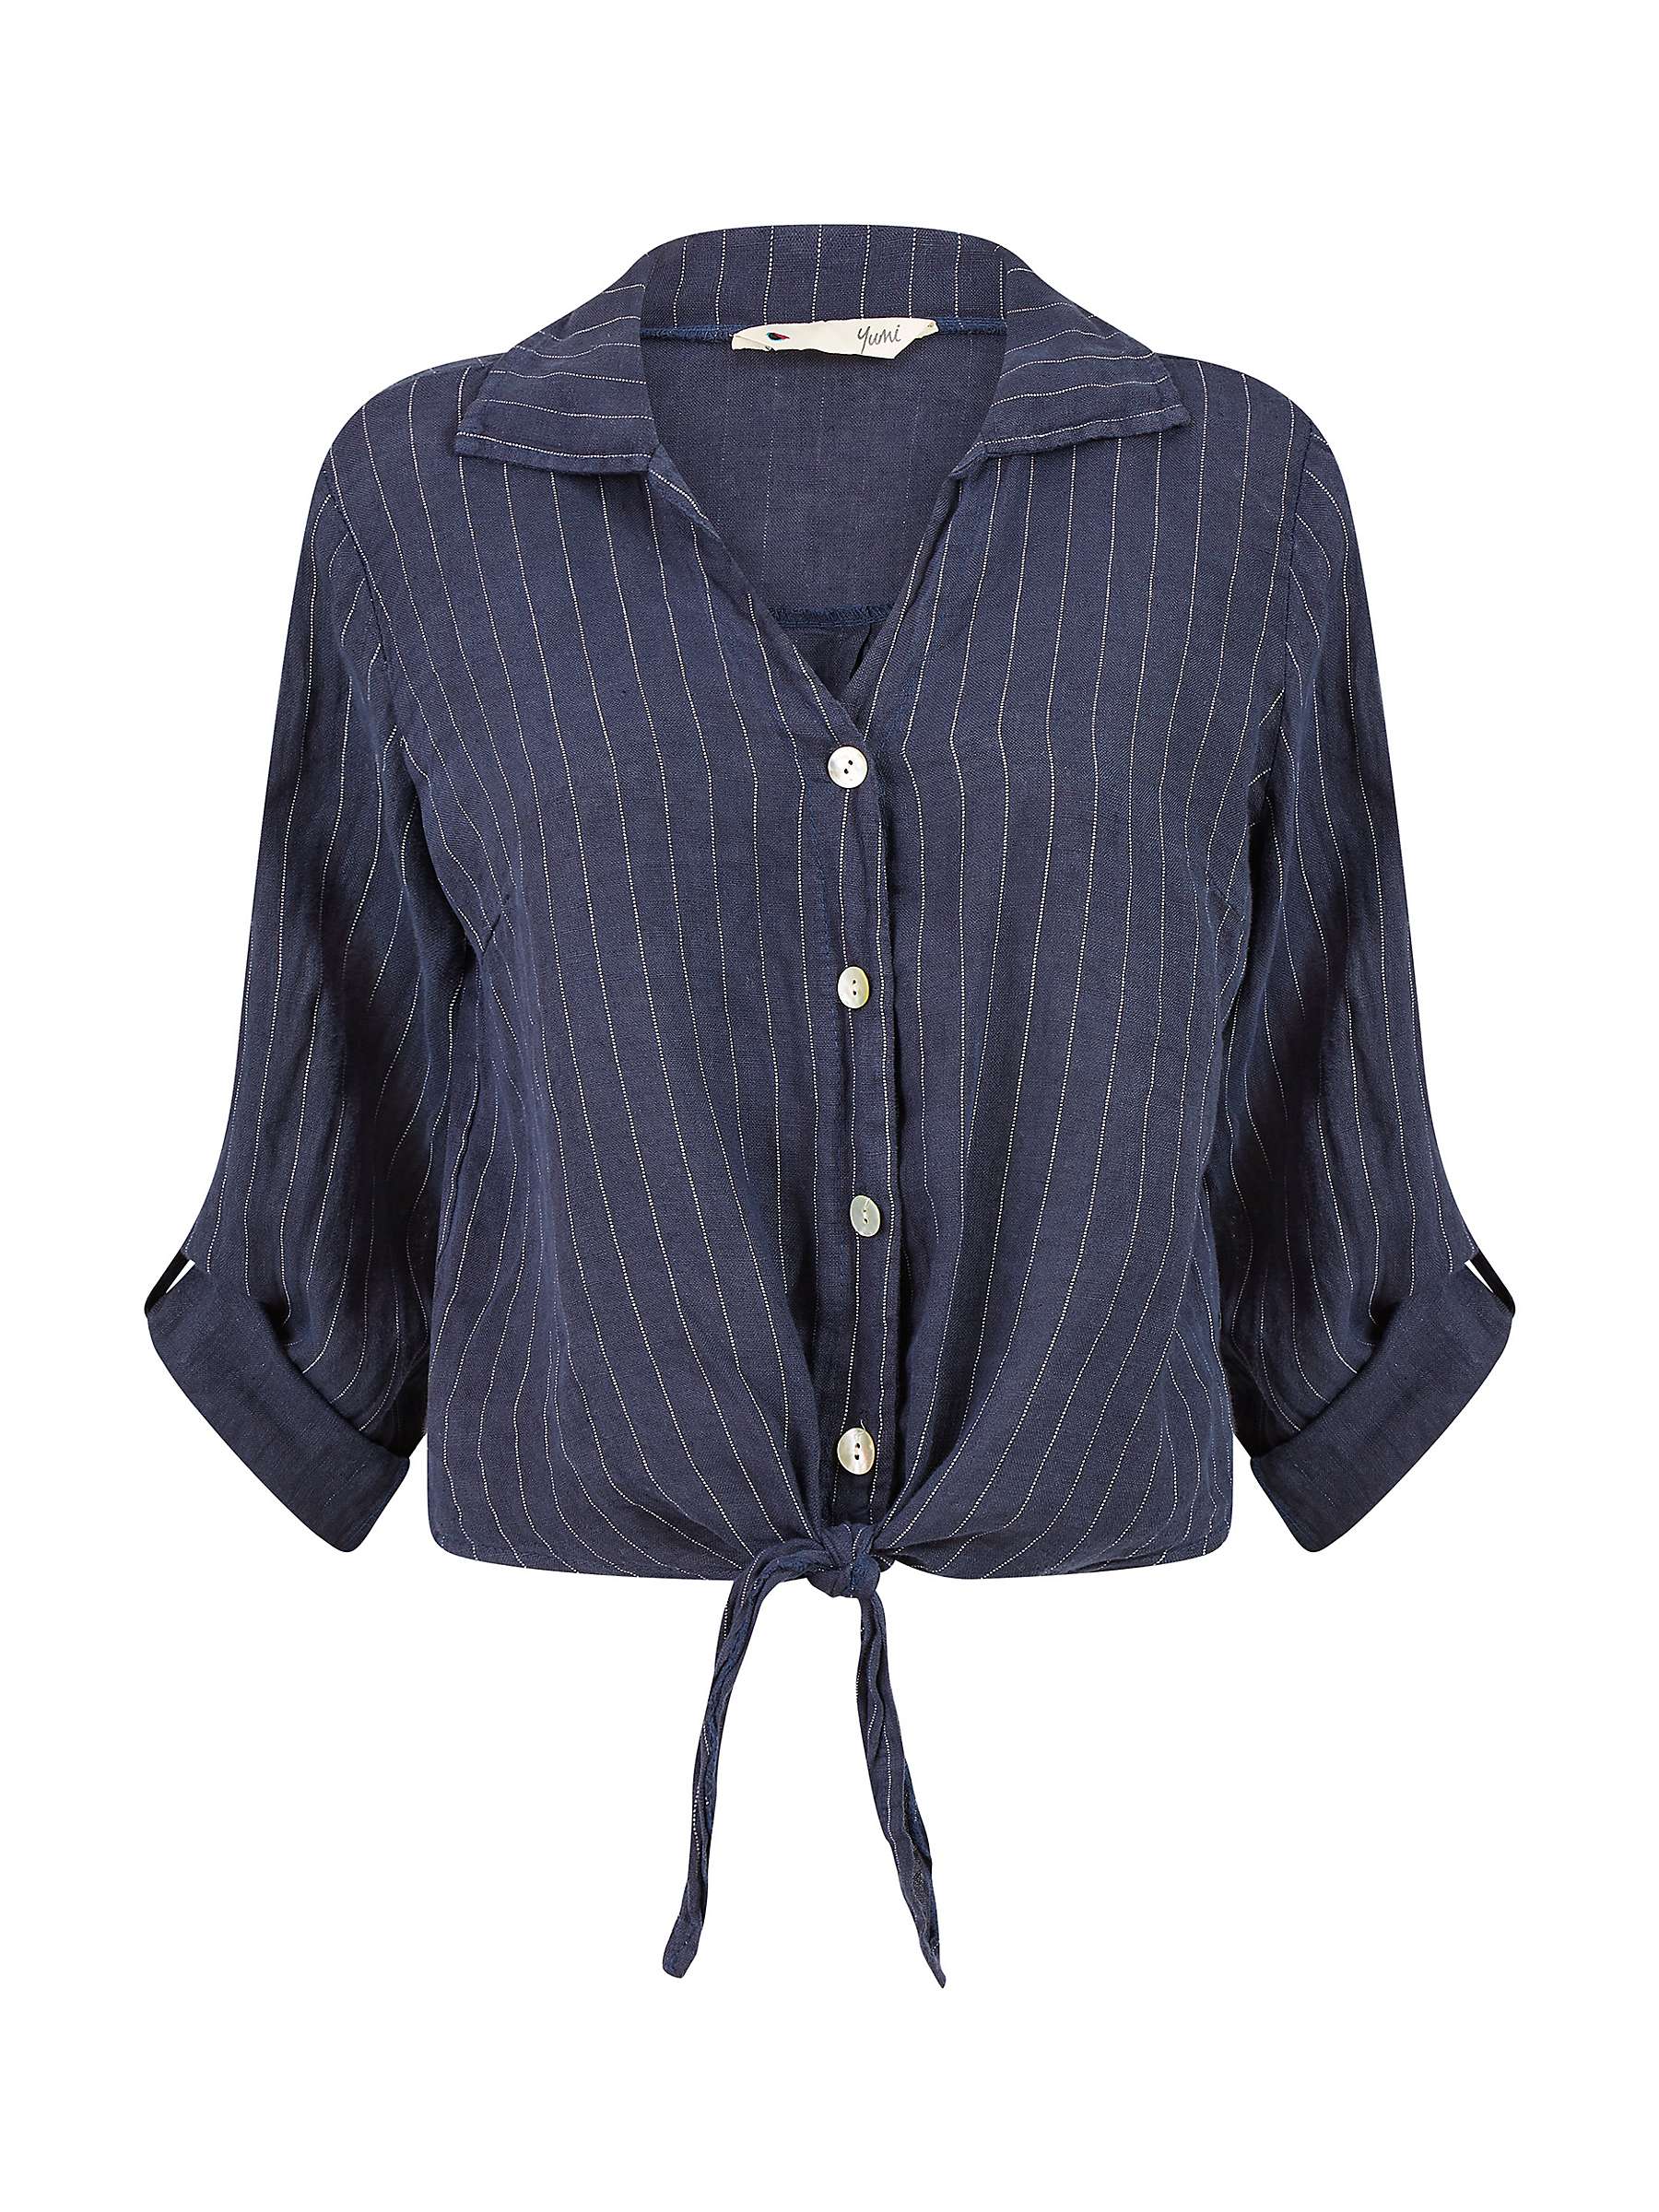 Buy Yumi Italian Linen Striped Front Tie Shirt Online at johnlewis.com